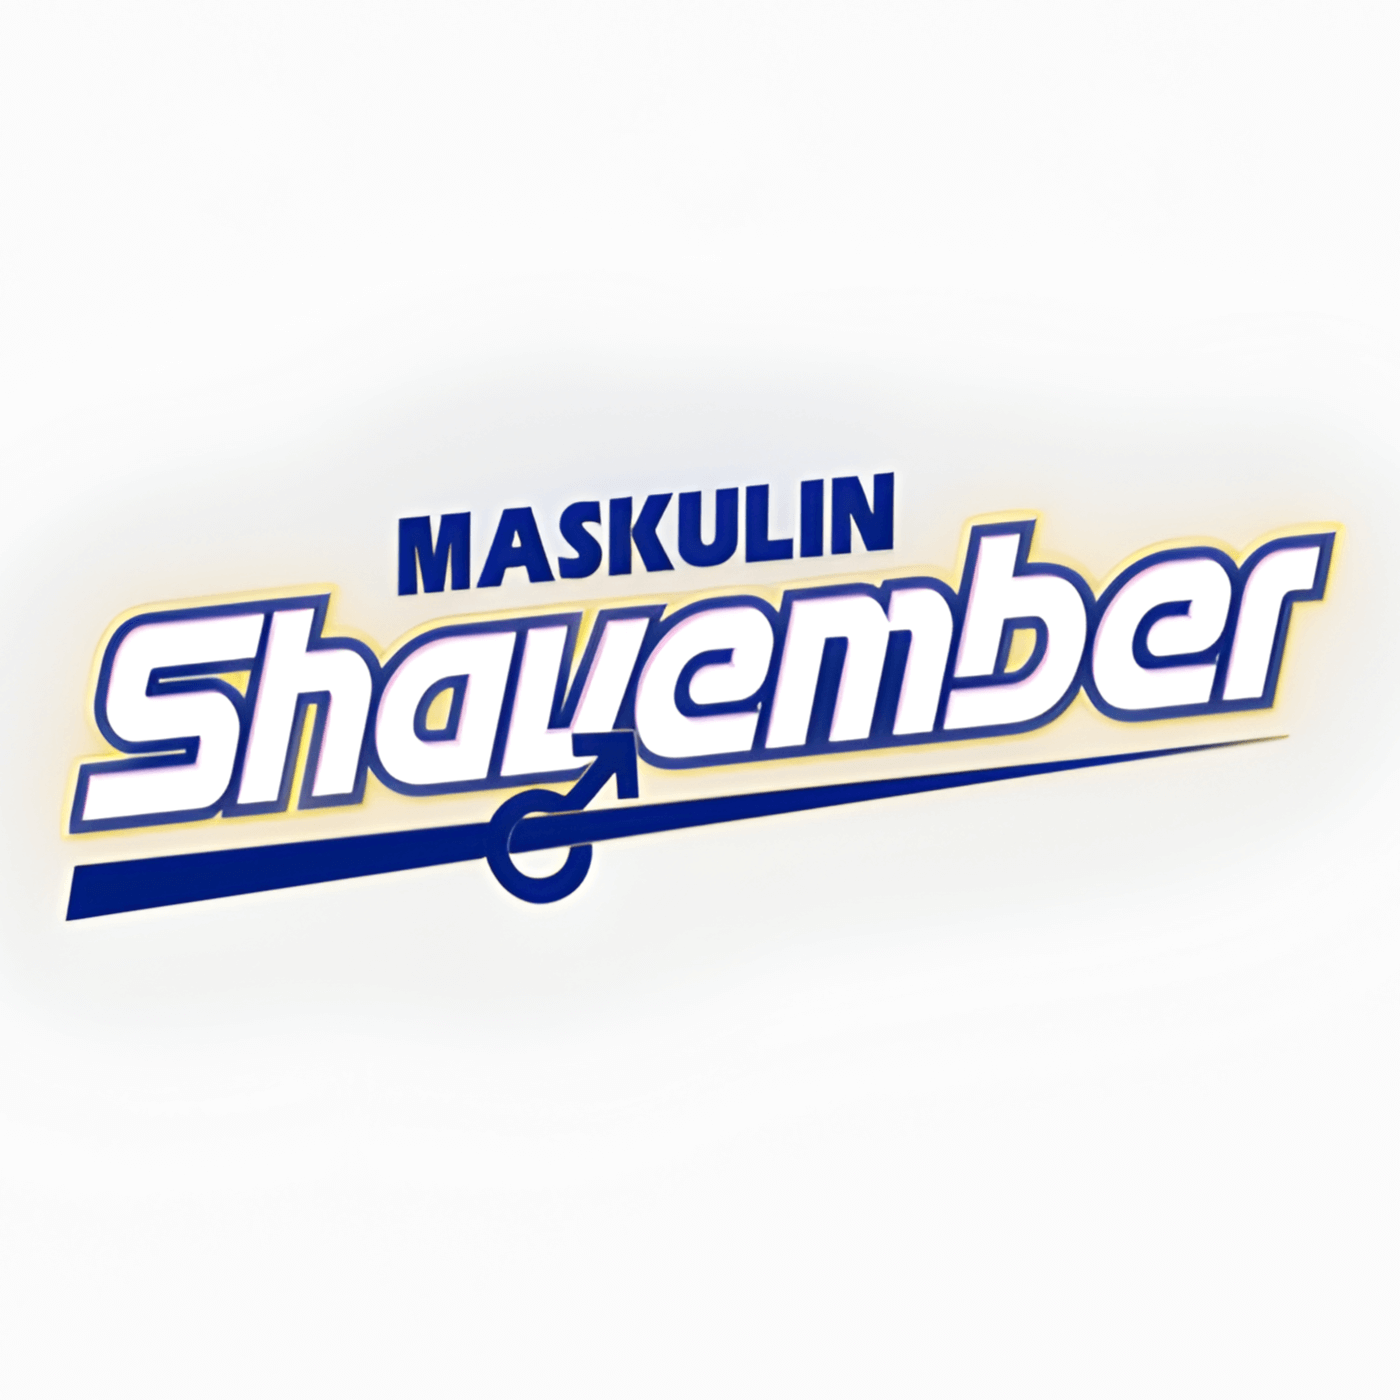 Maskulin Shavember - SEENI Podcast [BM]